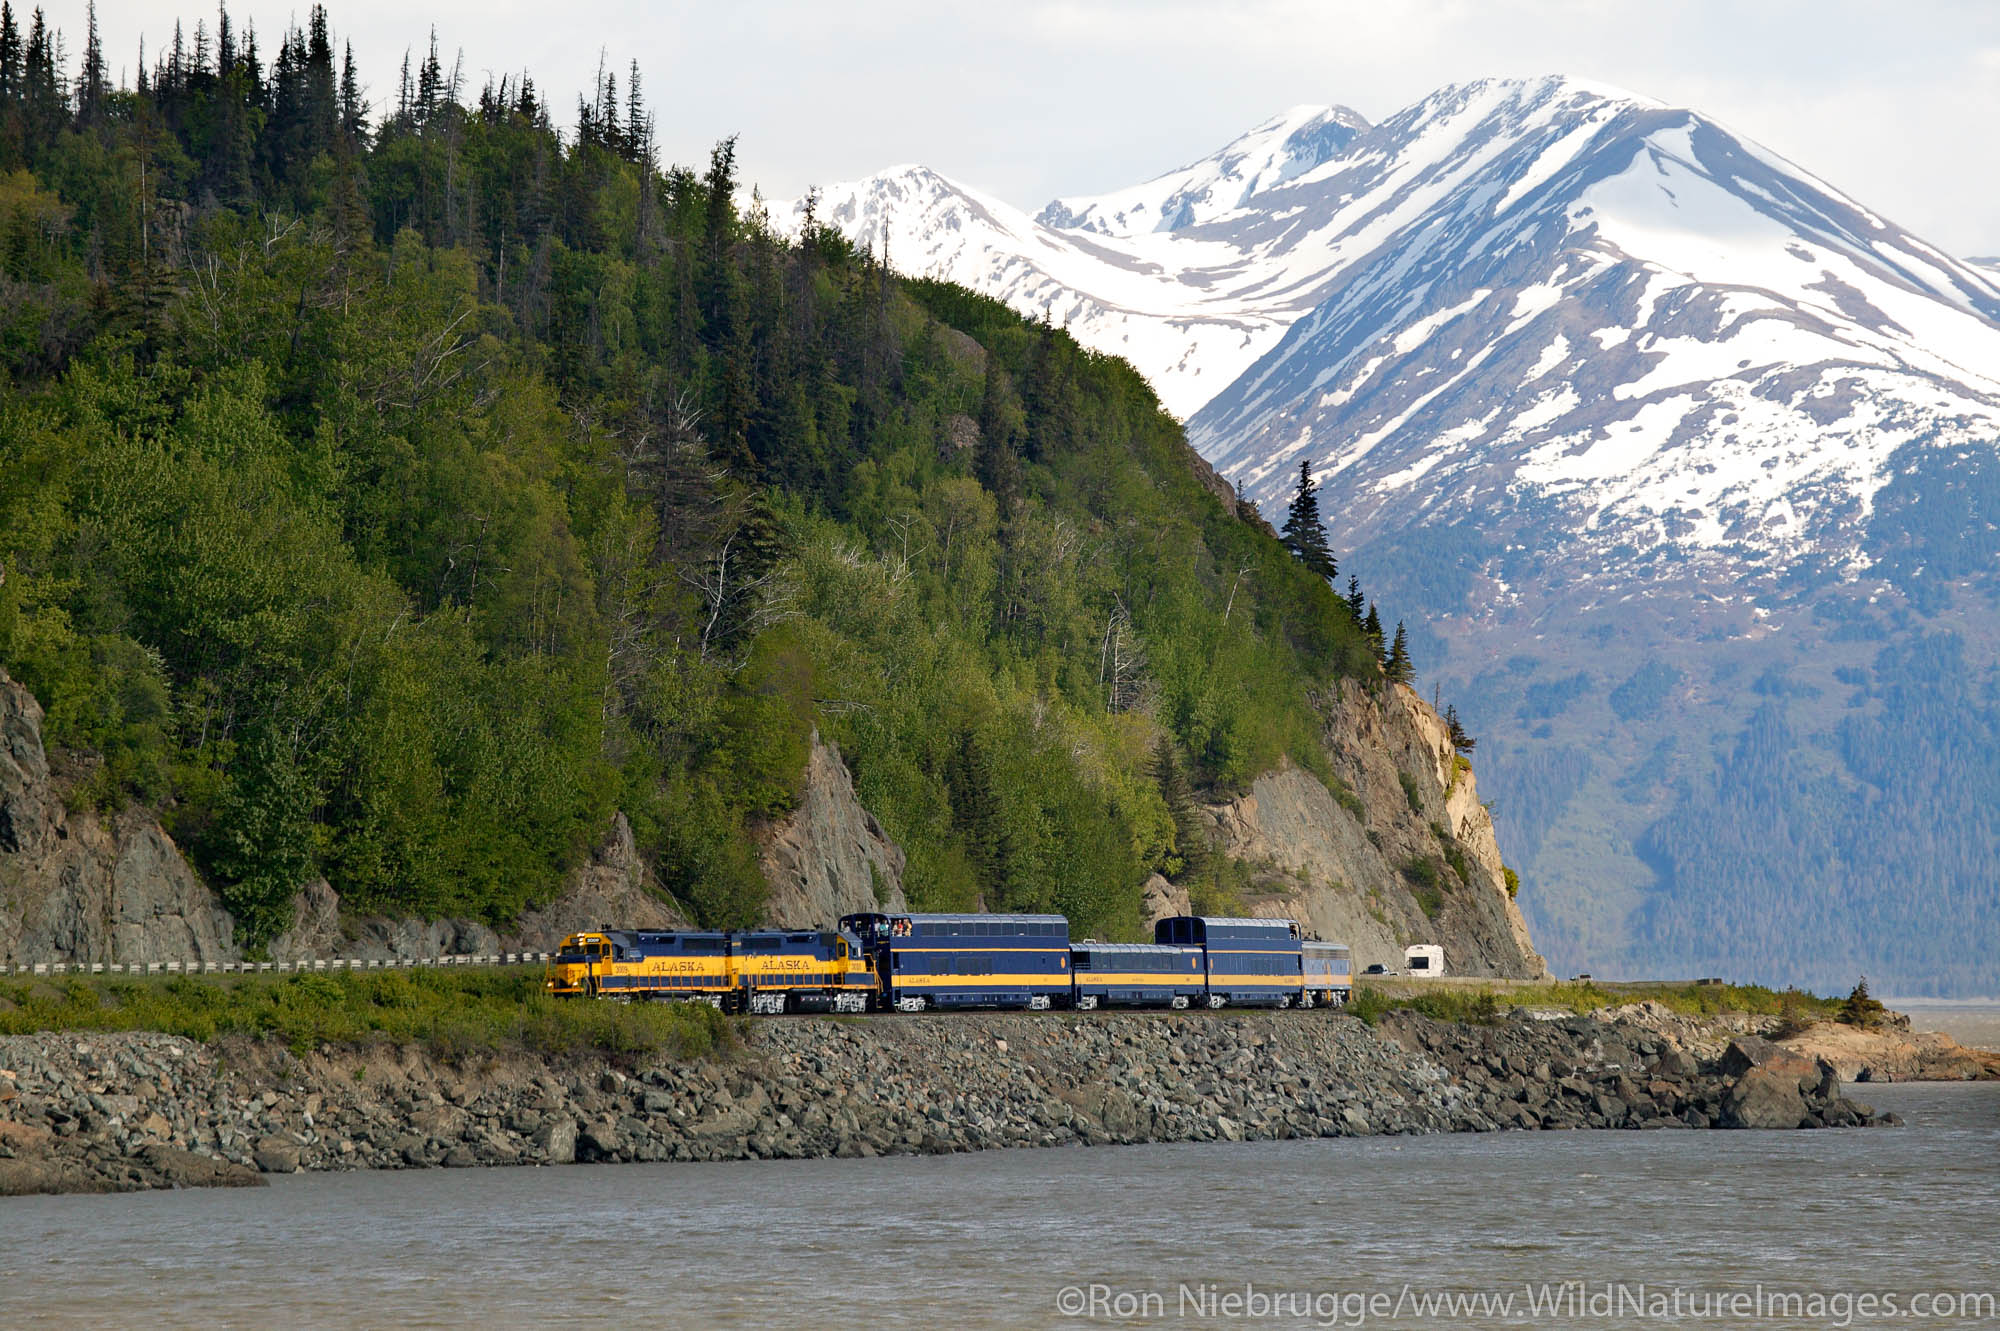 The first class passenger railcar on the Alaska Railroad, Anchorage, Alaska.